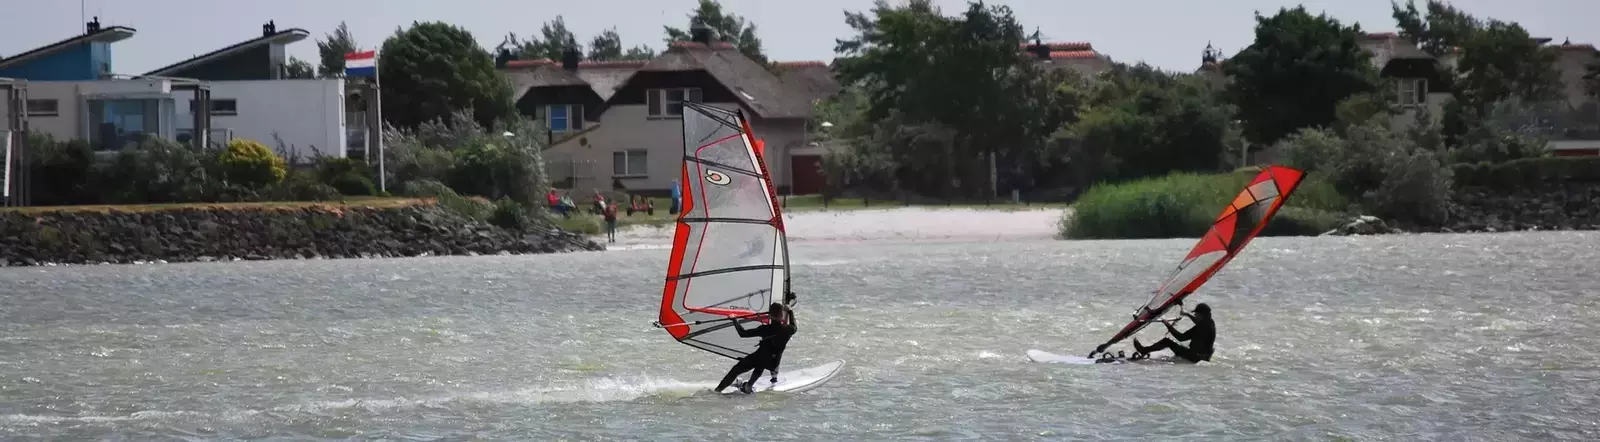 windsurf vakantie